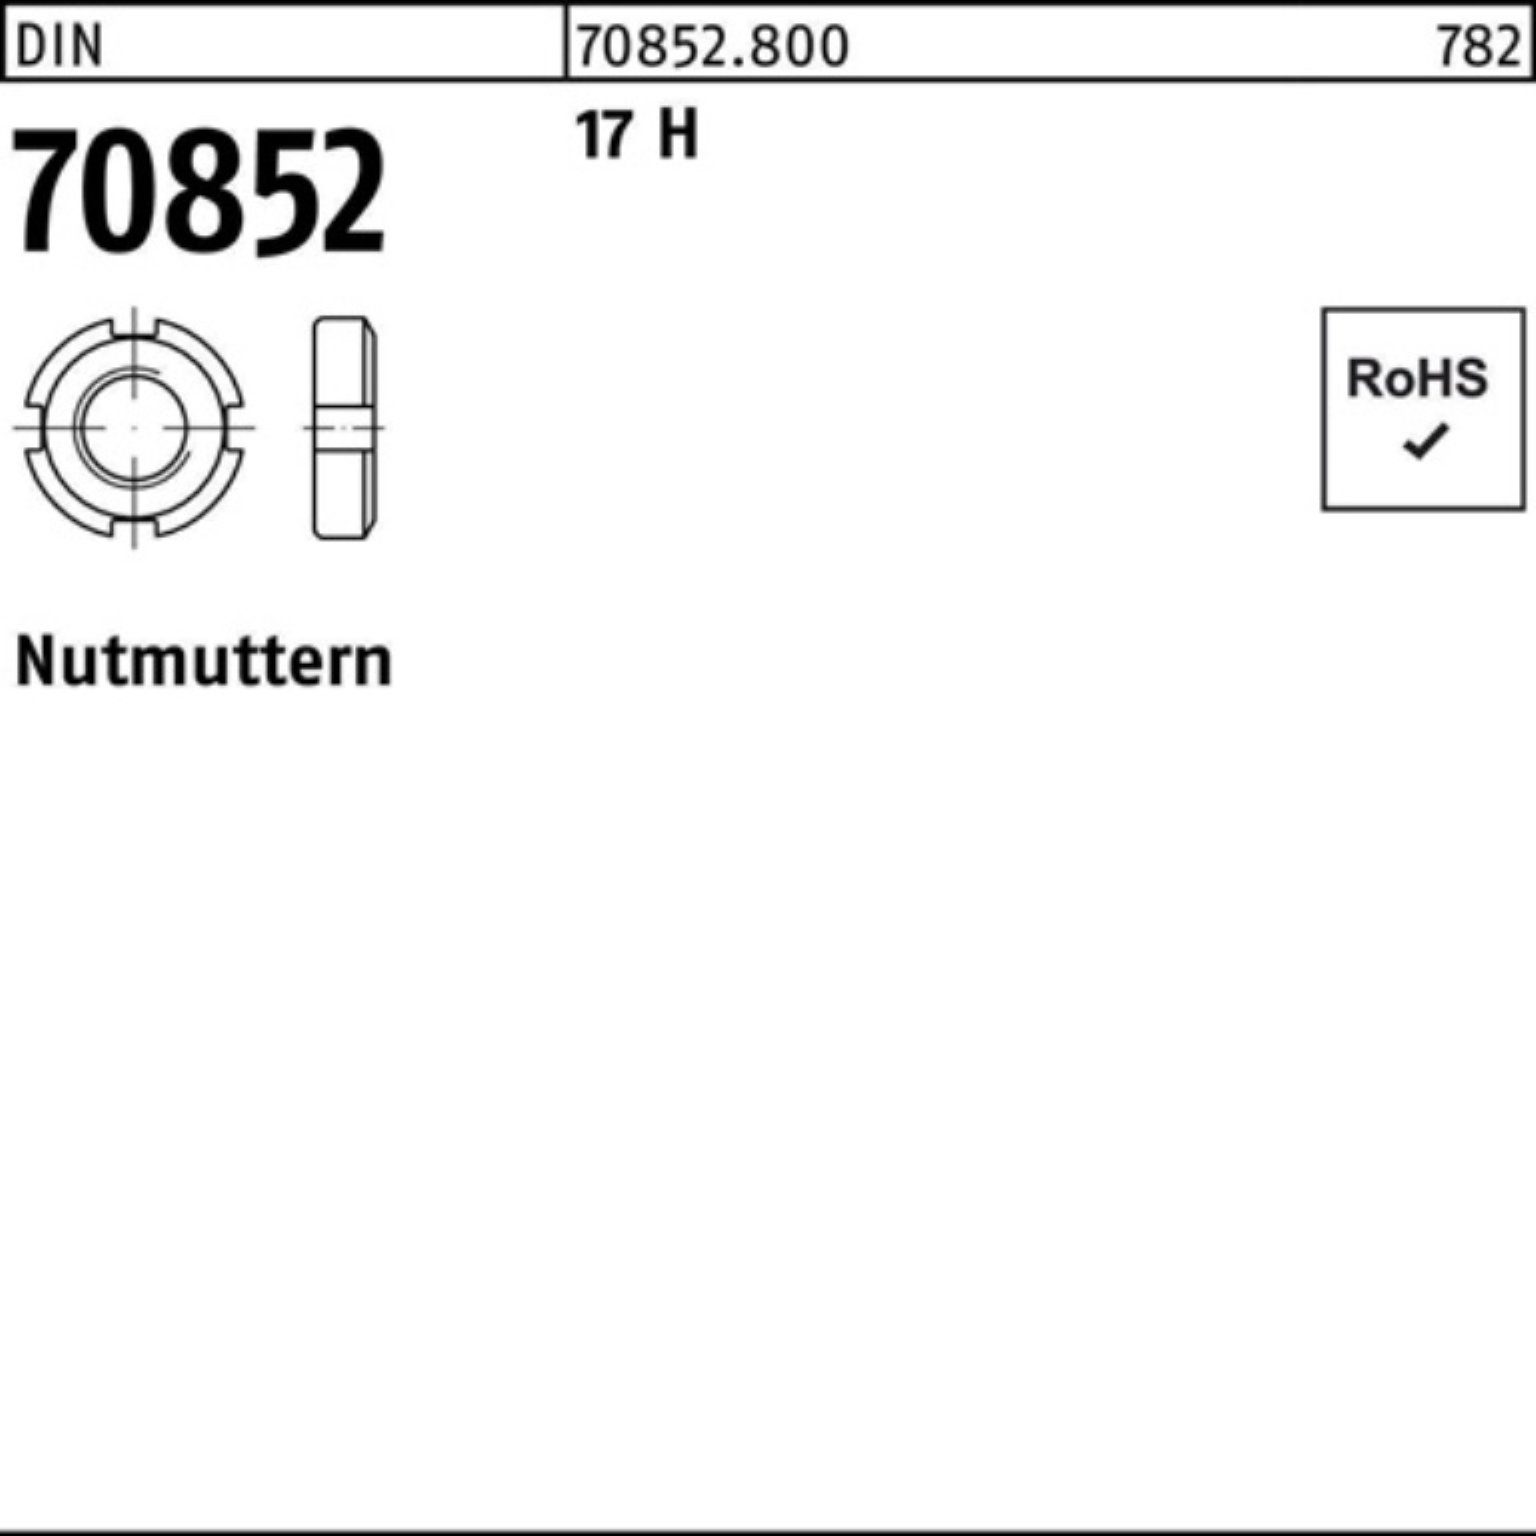 Reyher Nutmutter 100er Pack Nutmutter DIN 70852 M14x 1,5 17 H 25 Stück DIN 70852 17 H